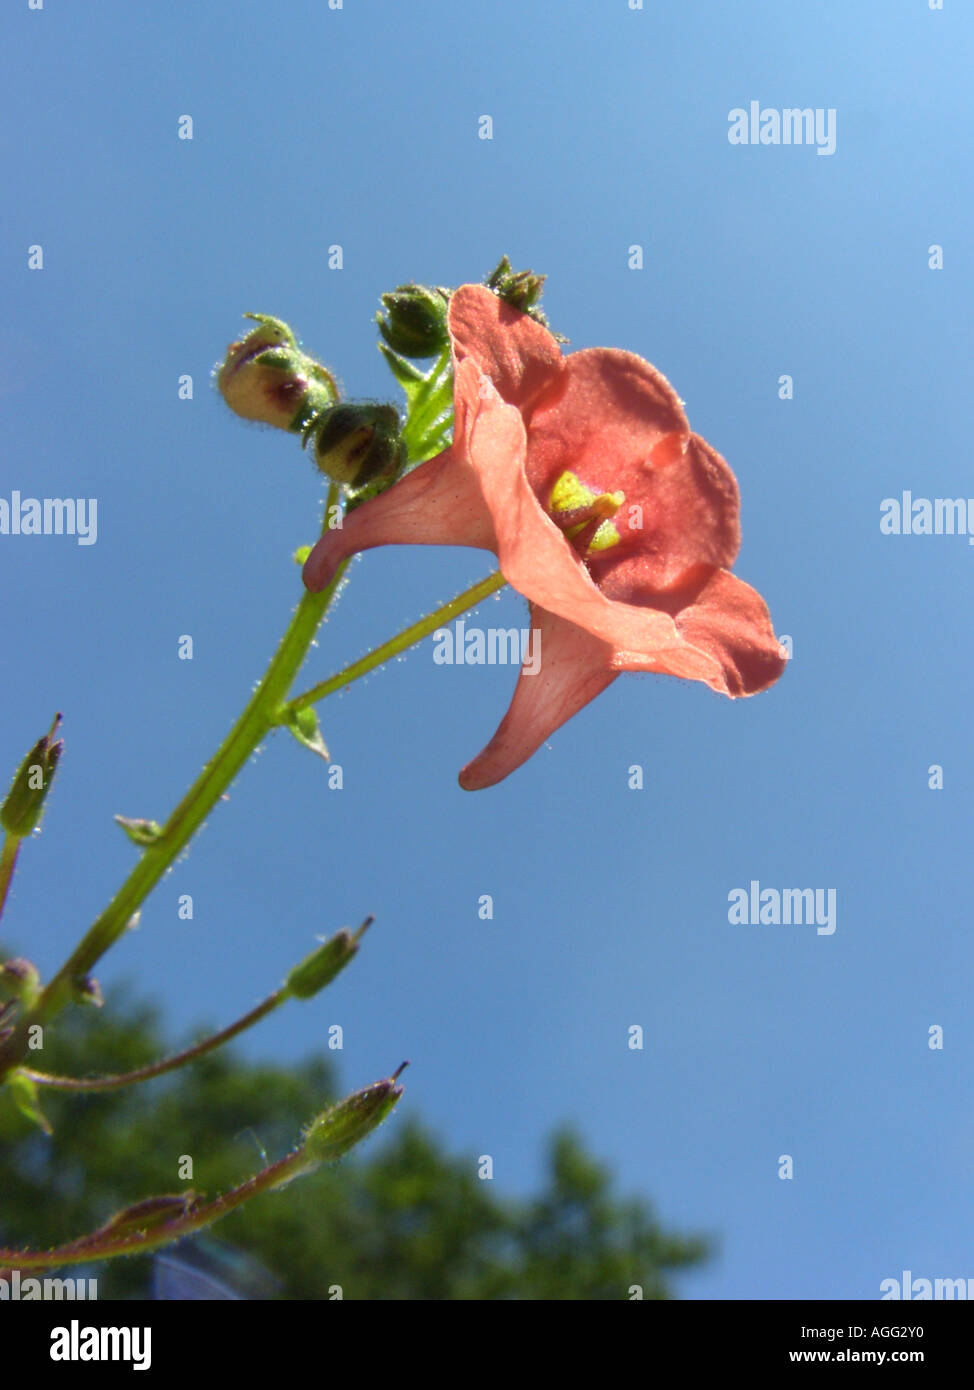 twinspur, Barbers diascia (Diascia barberae), flower with two spurs against blue sky Stock Photo